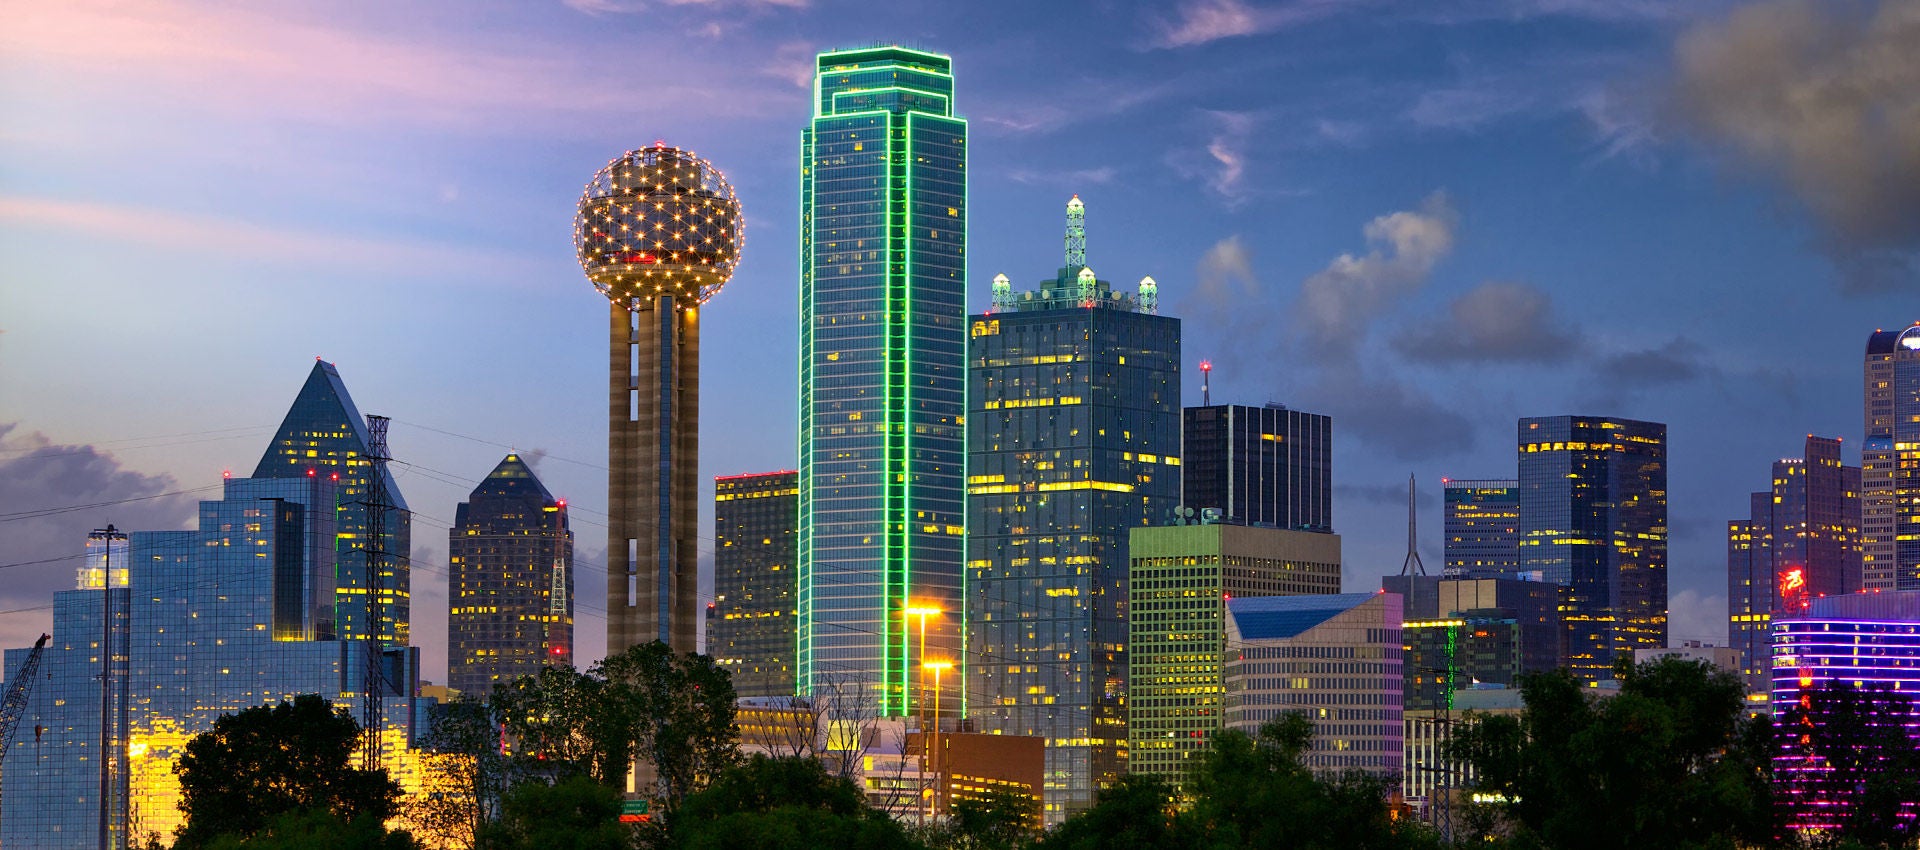 The Dallas skyline lights up as dusk fades across the city. 